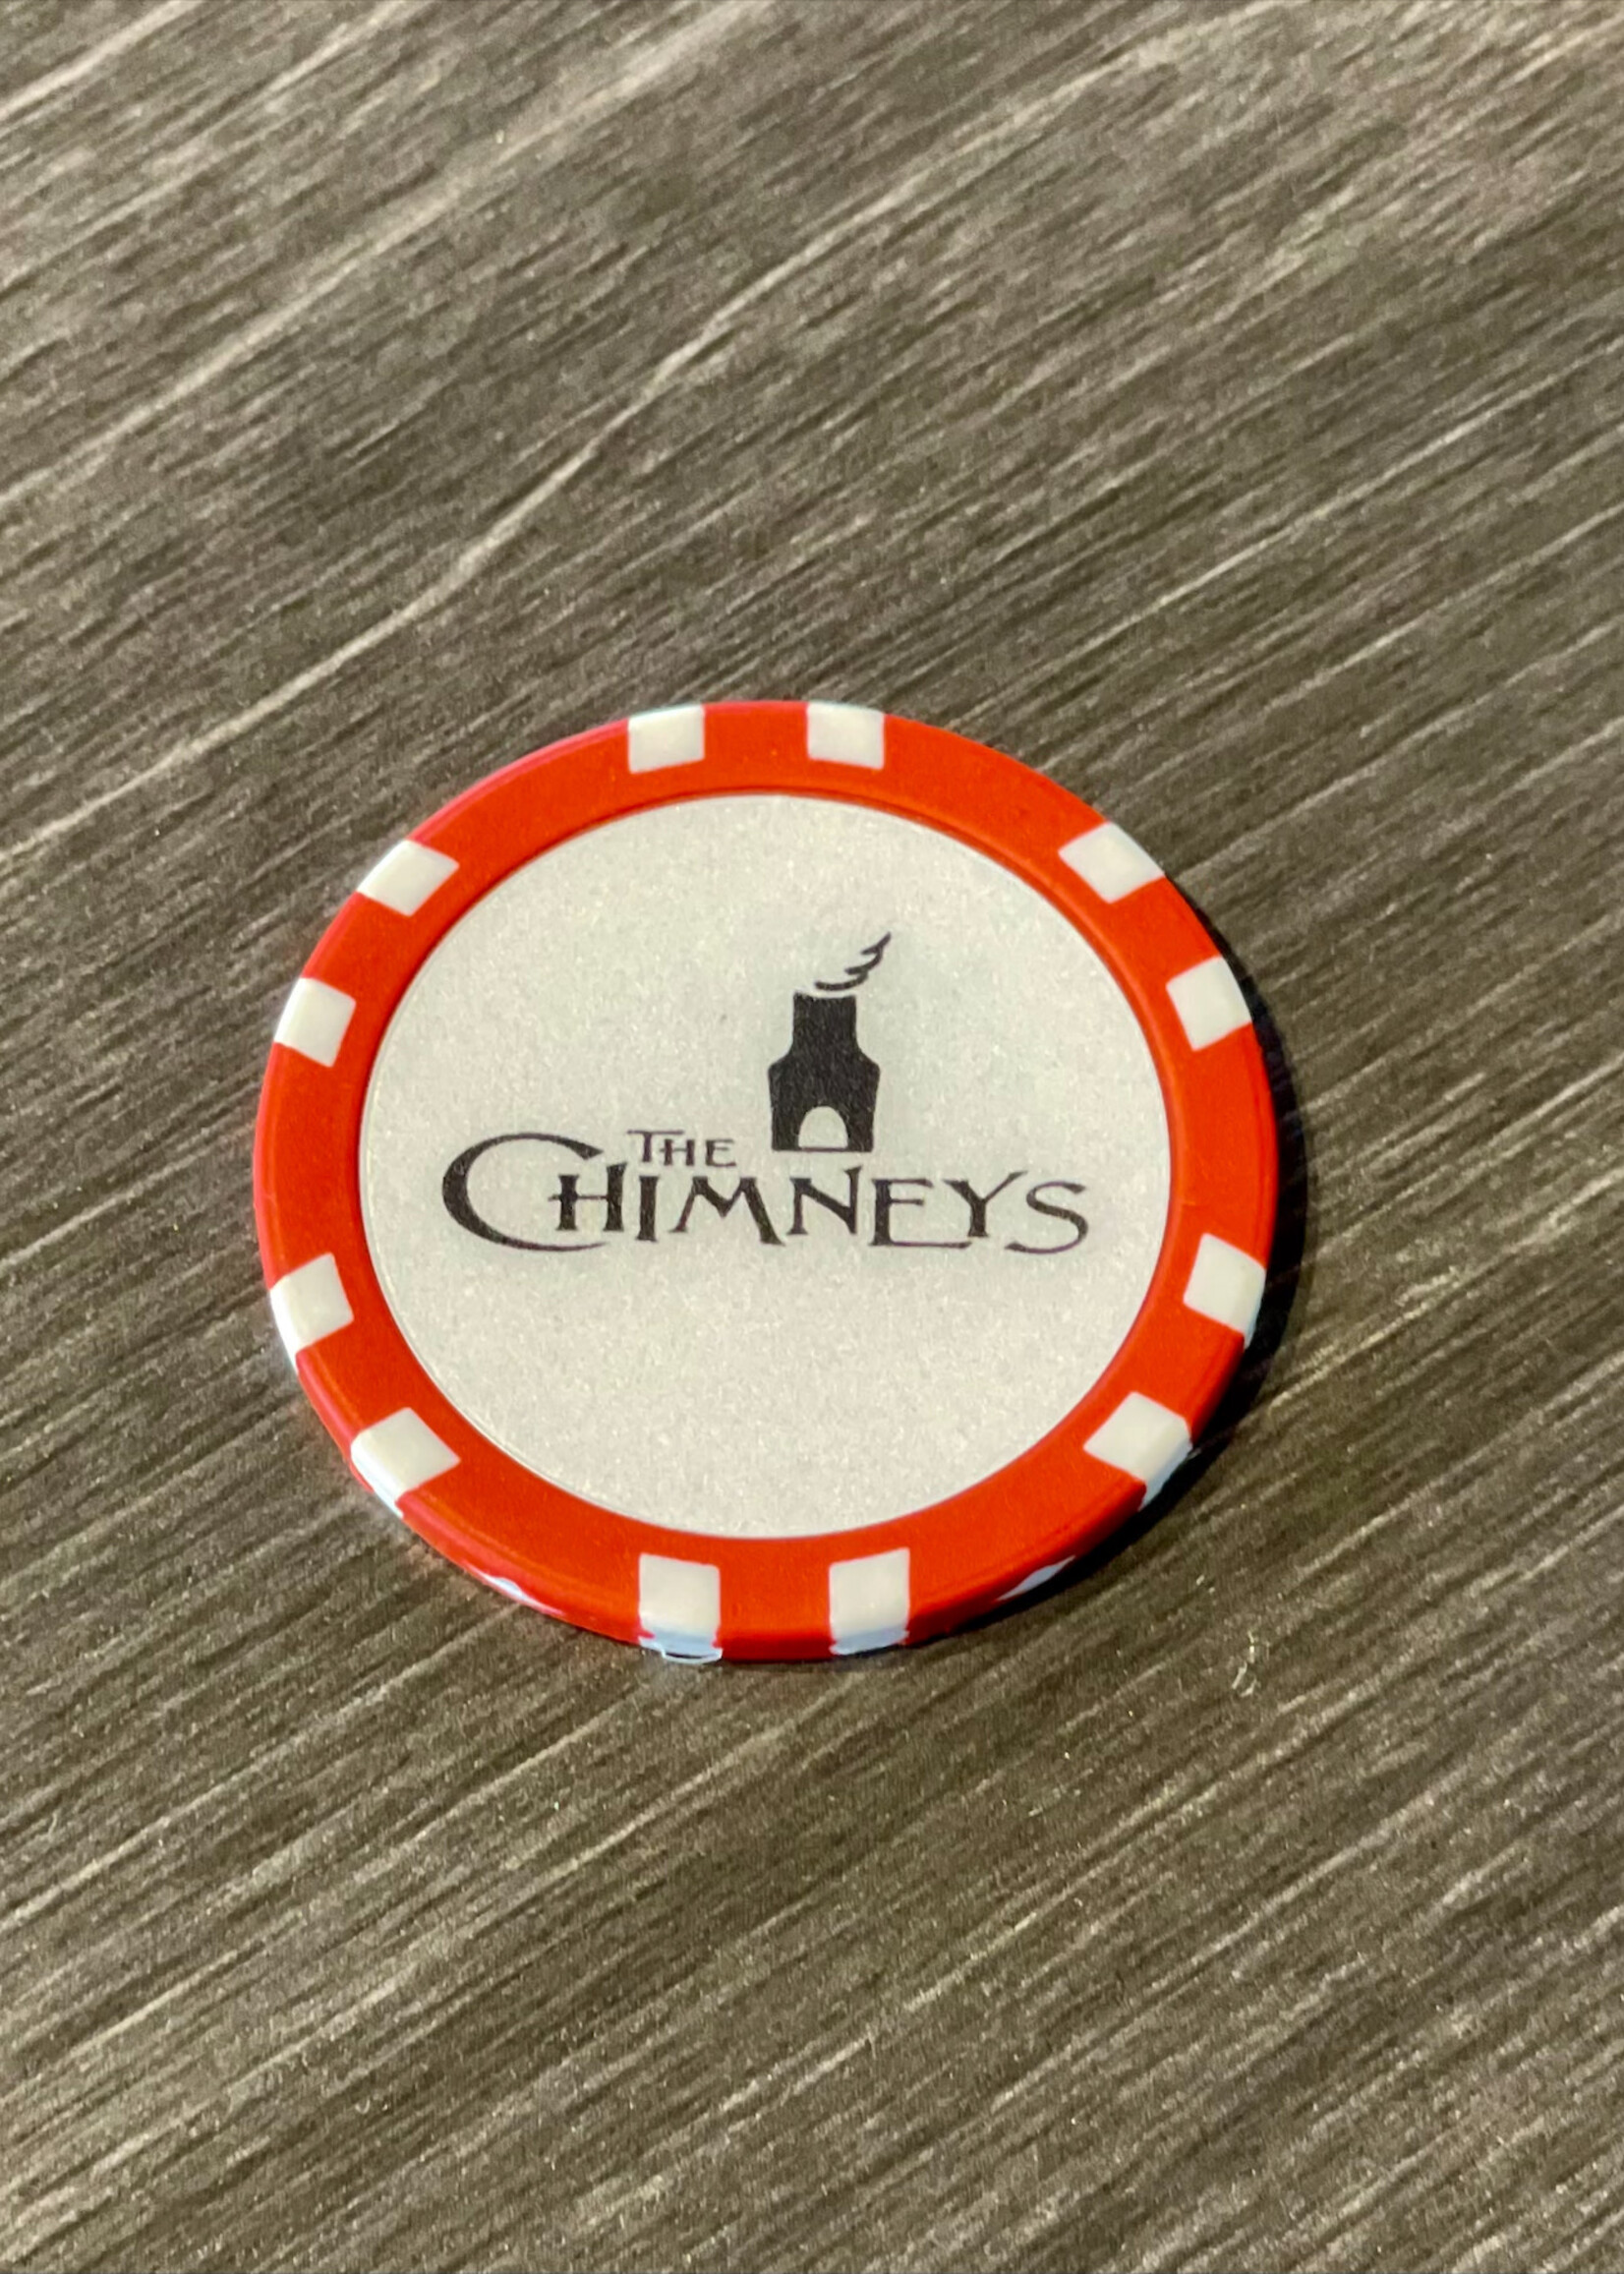 Chimneys Poker Chip